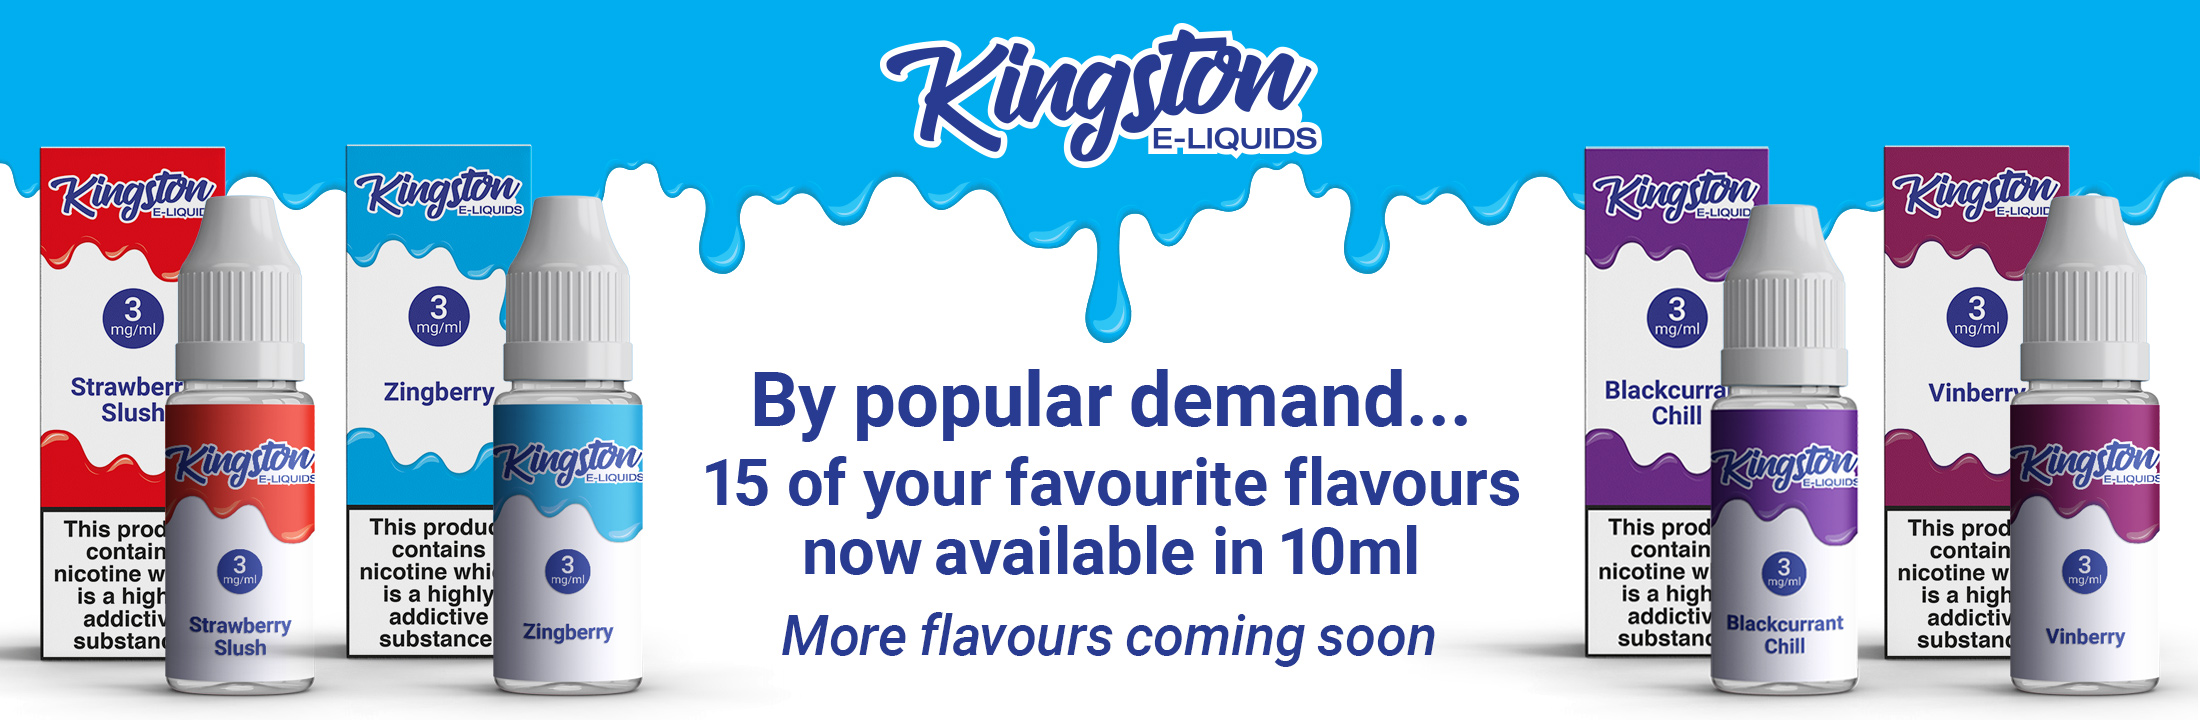 Kingston 10ml e-liquids